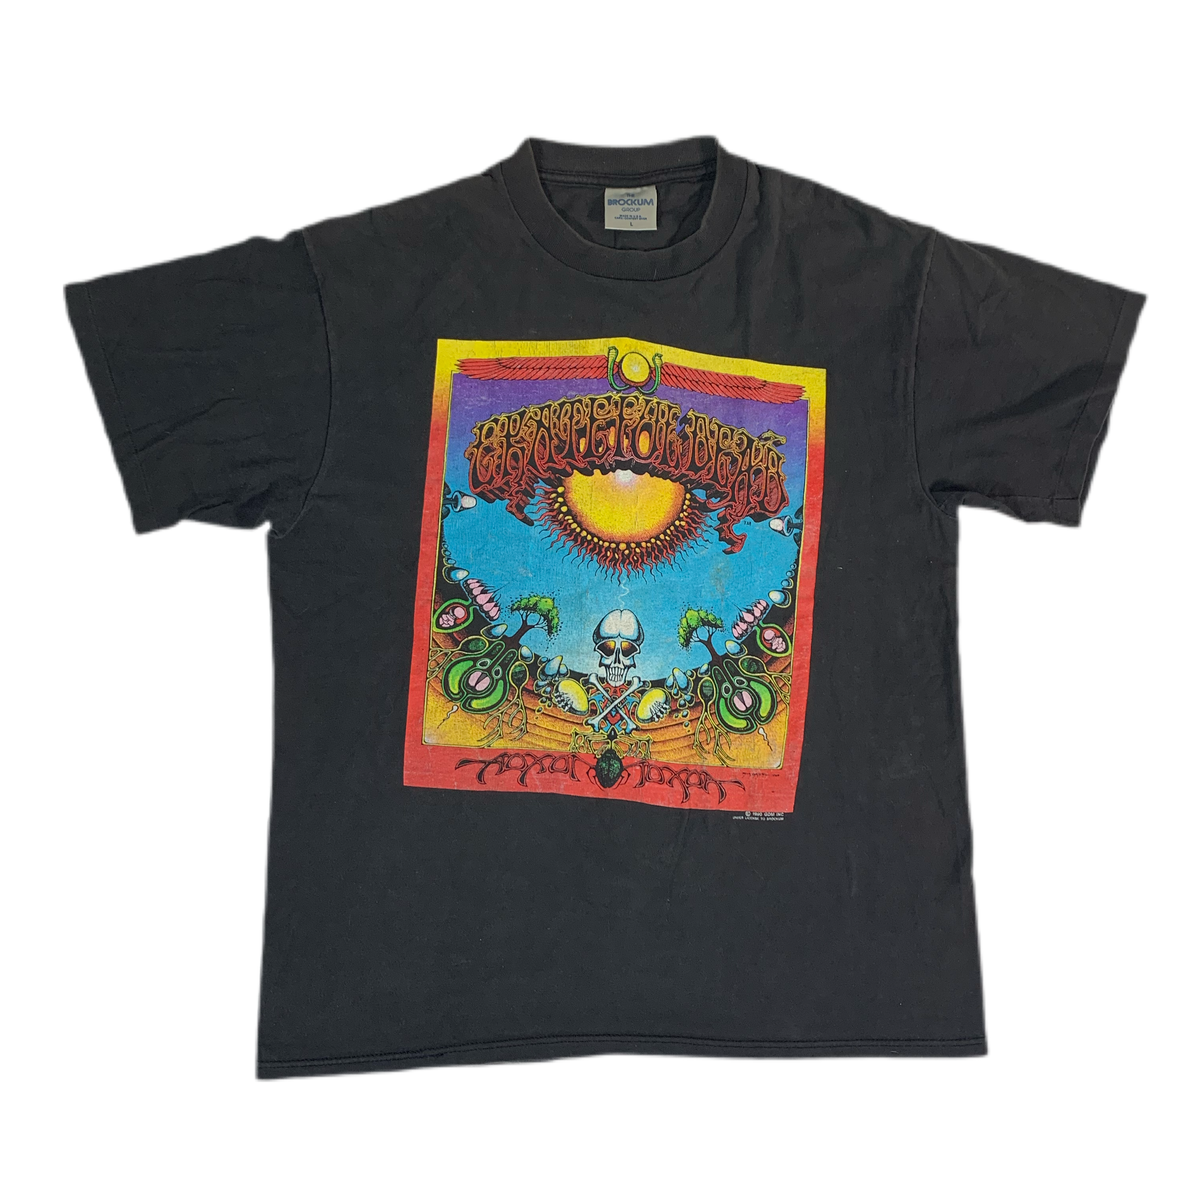 Vintage Grateful Dead “Aoxomoxoa“ T-Shirt - jointcustodydc